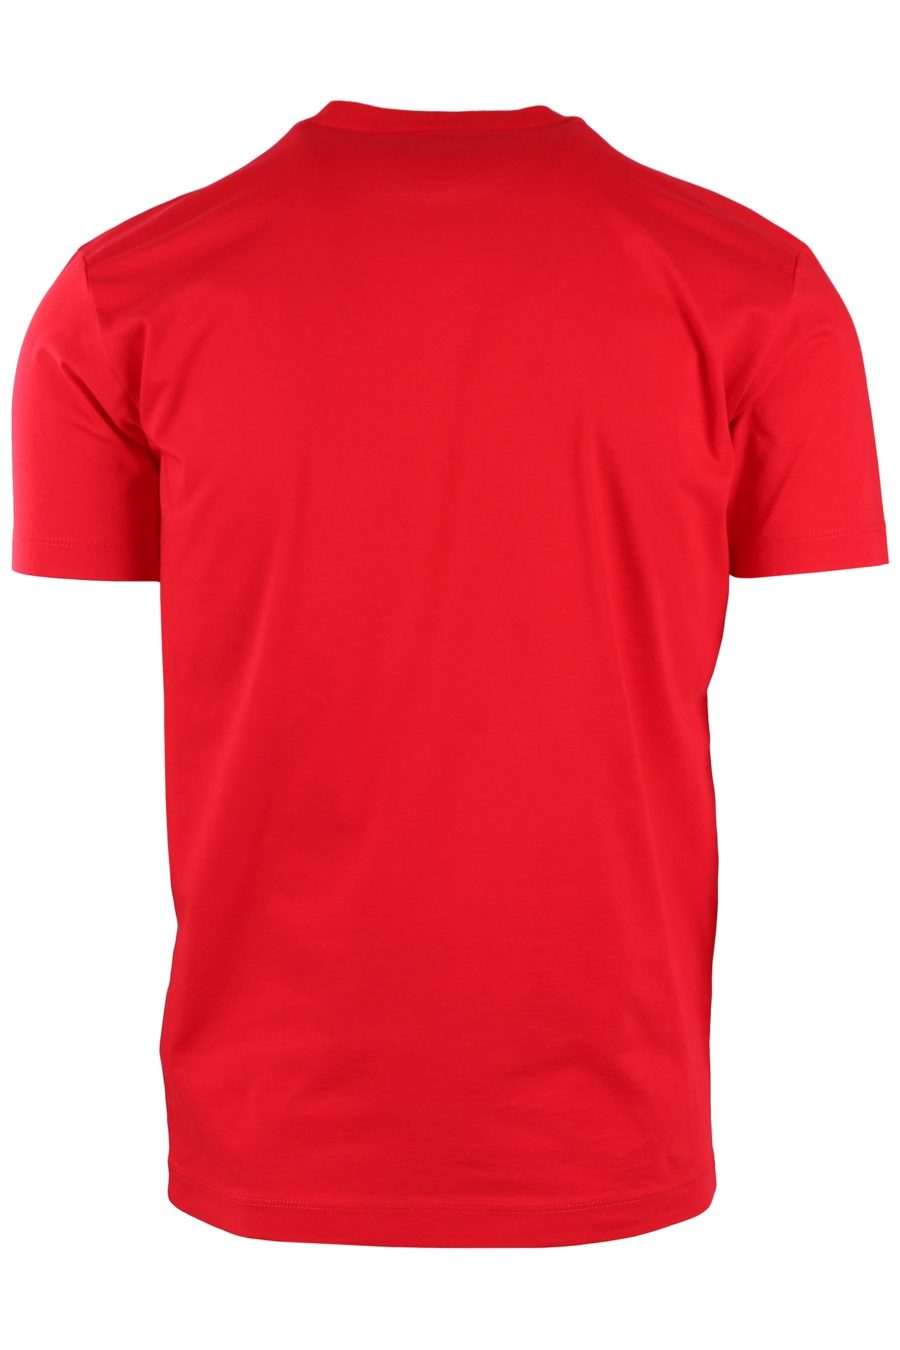 T-shirt Dsquared2 rouge avec grand logo "Icon" - 0045cd81ce58a23514d5072af5678a85f442ebad